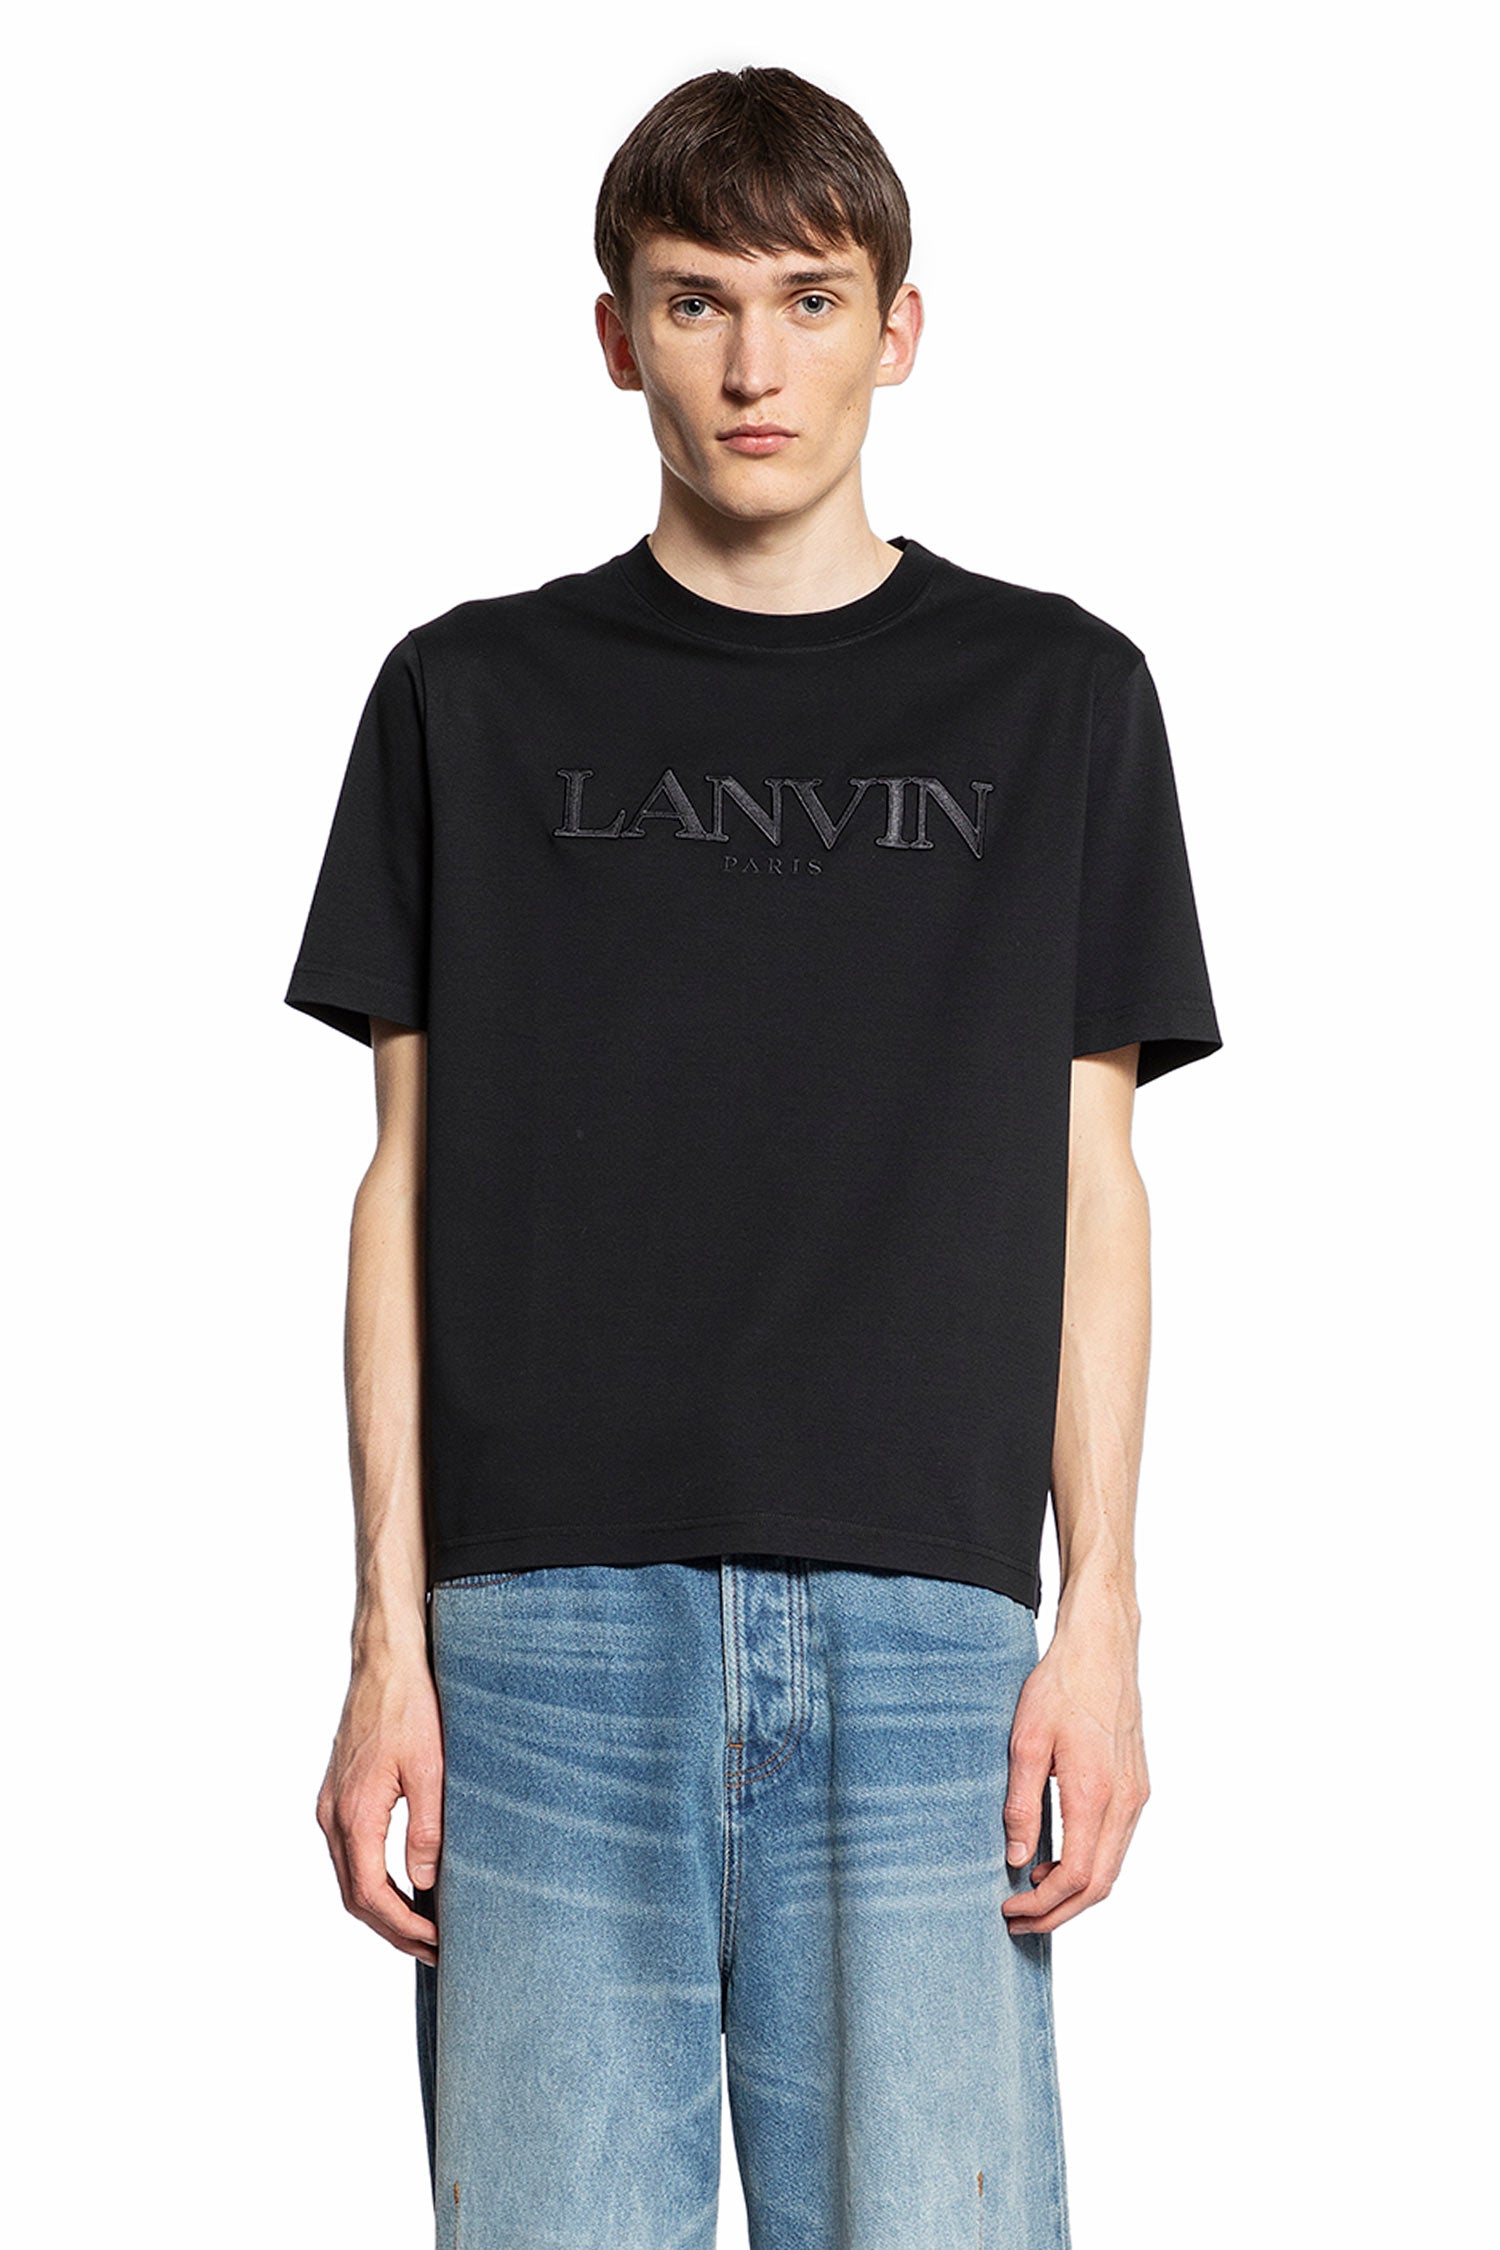 LANVIN MAN BLACK T-SHIRTS